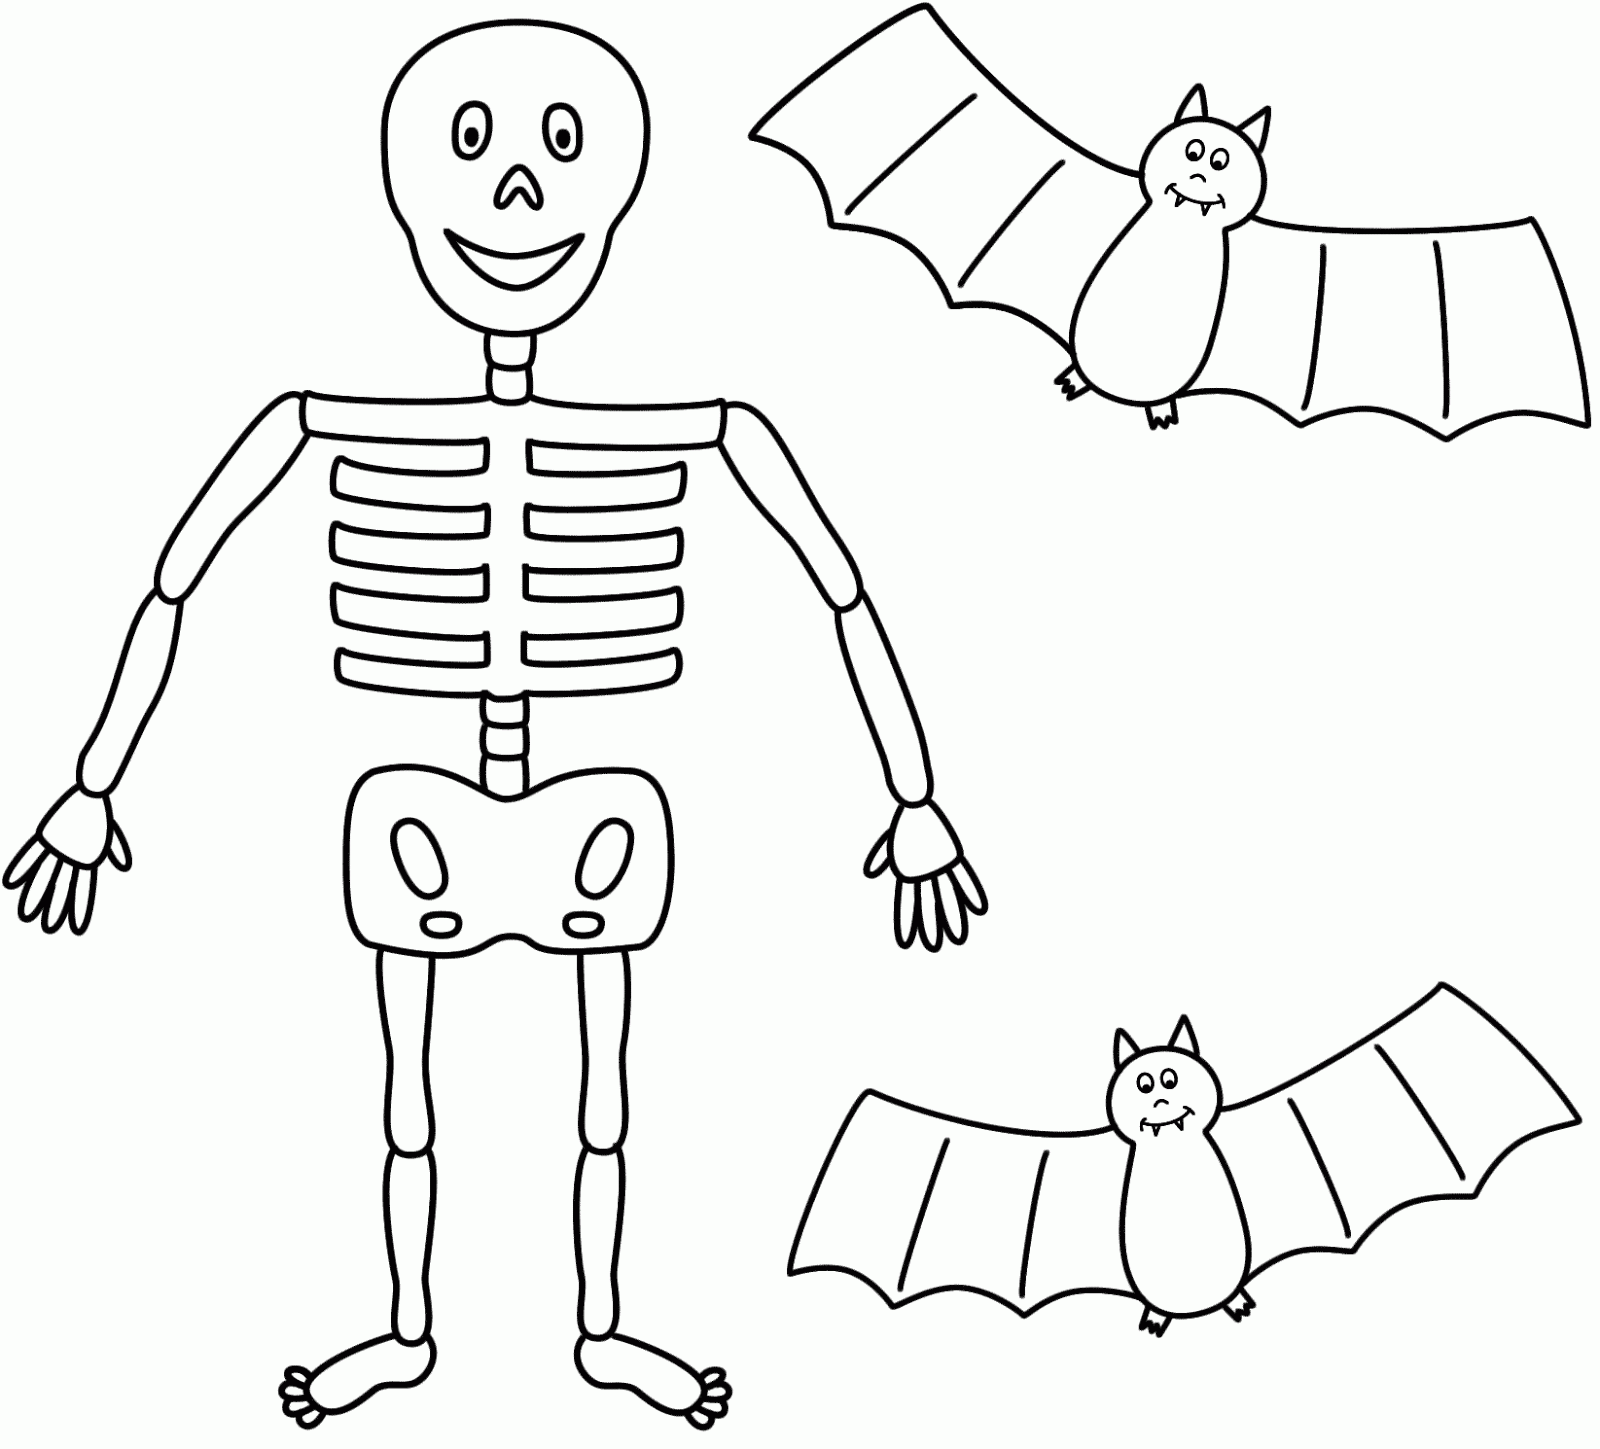 Easy Skeleton Drawing - HelloArtsy